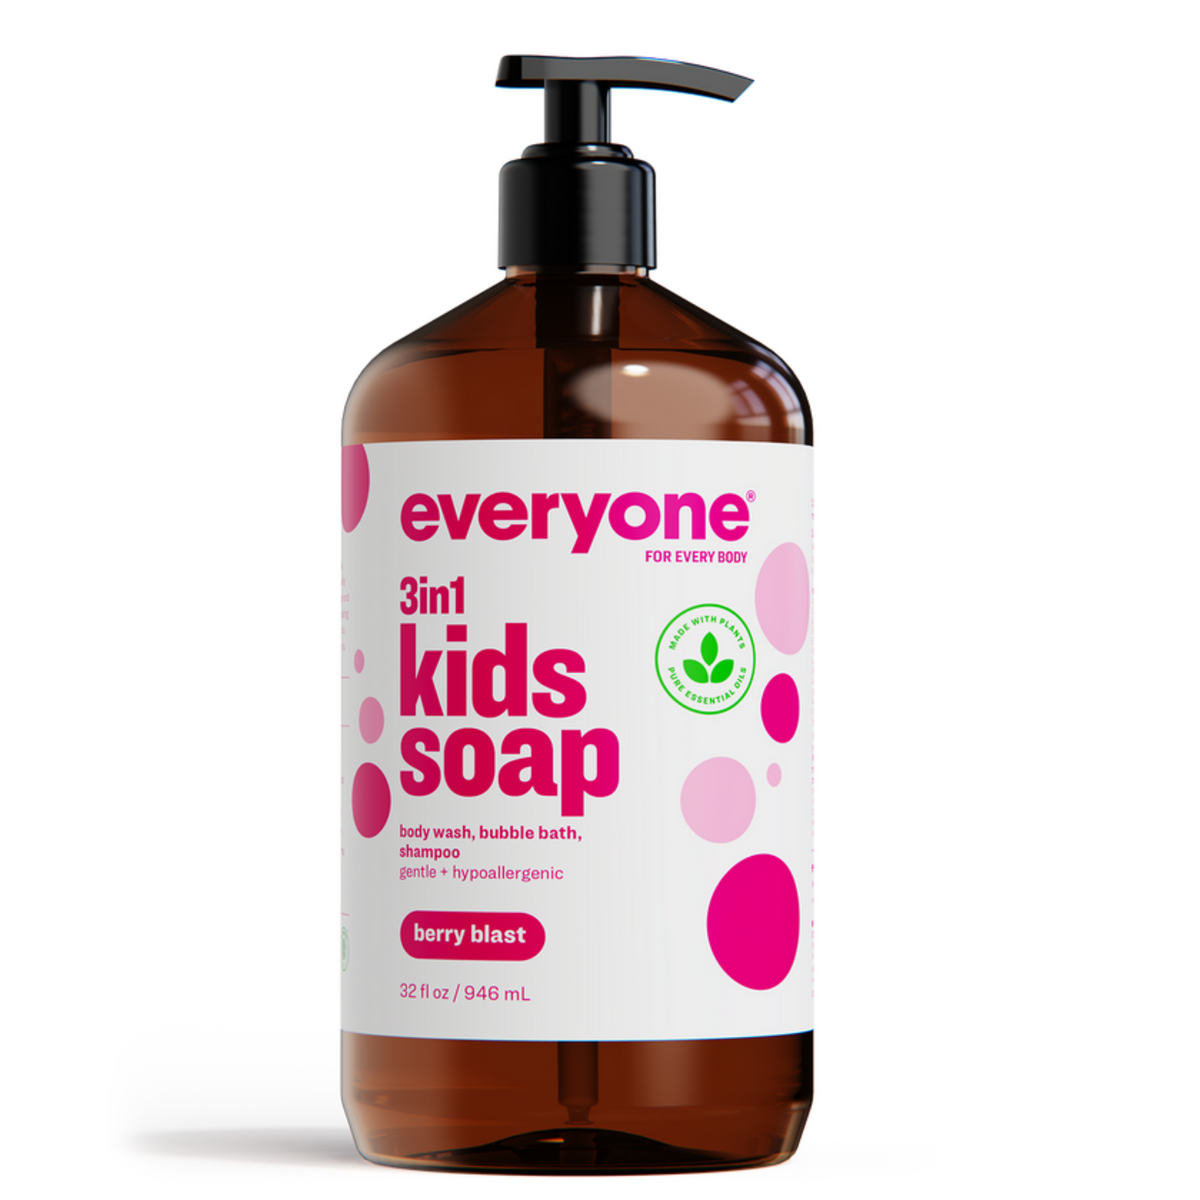 Primary Image of Kids Berry Blast Soap